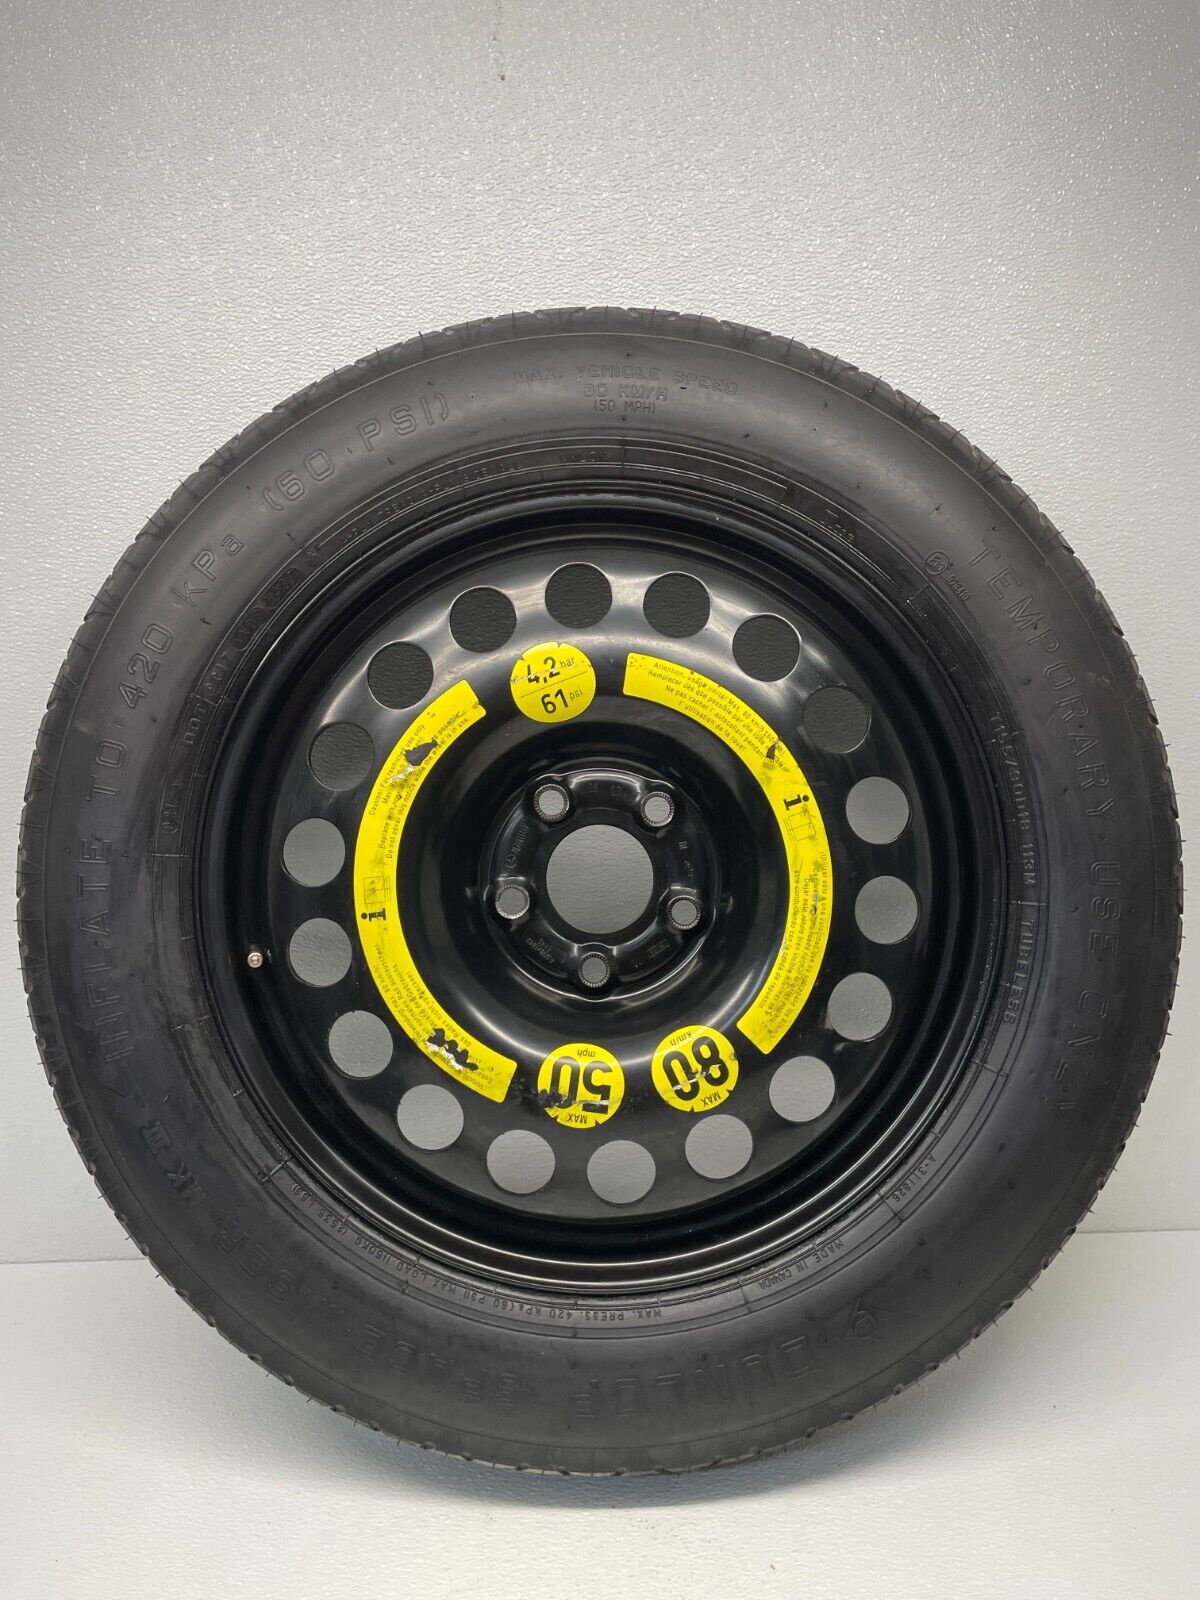 06-11 Mercedes W164 ML350 Emergency Spare Tire Wheel Donut Rim T 155 90 D18 OEM